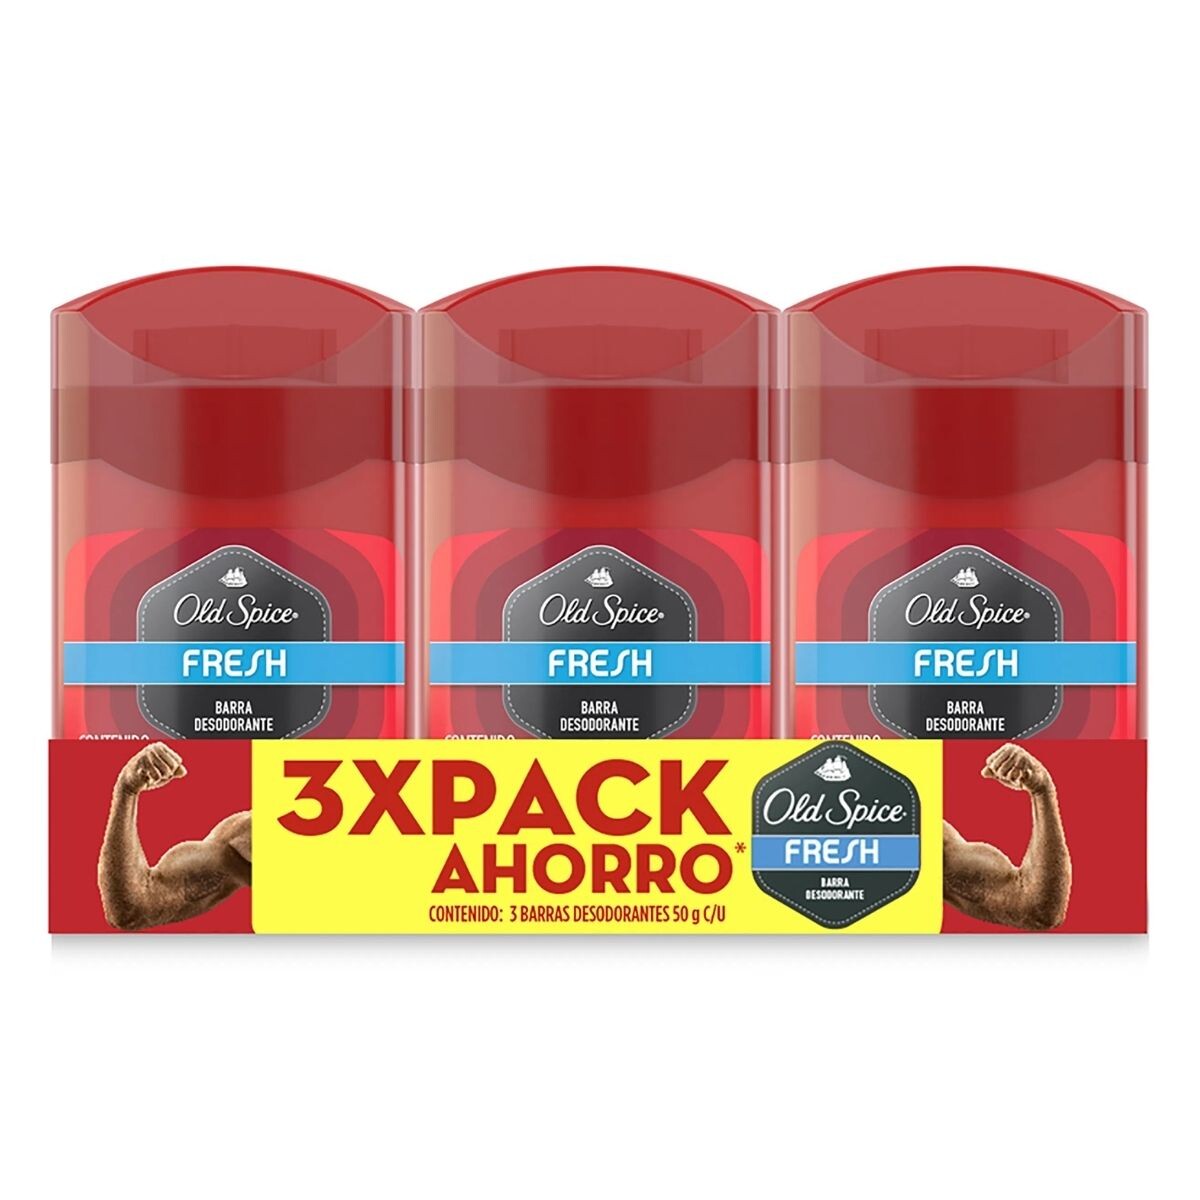 Desodorante Old Spice en Barra Fresh Pack Ahorro X3 50 GR 